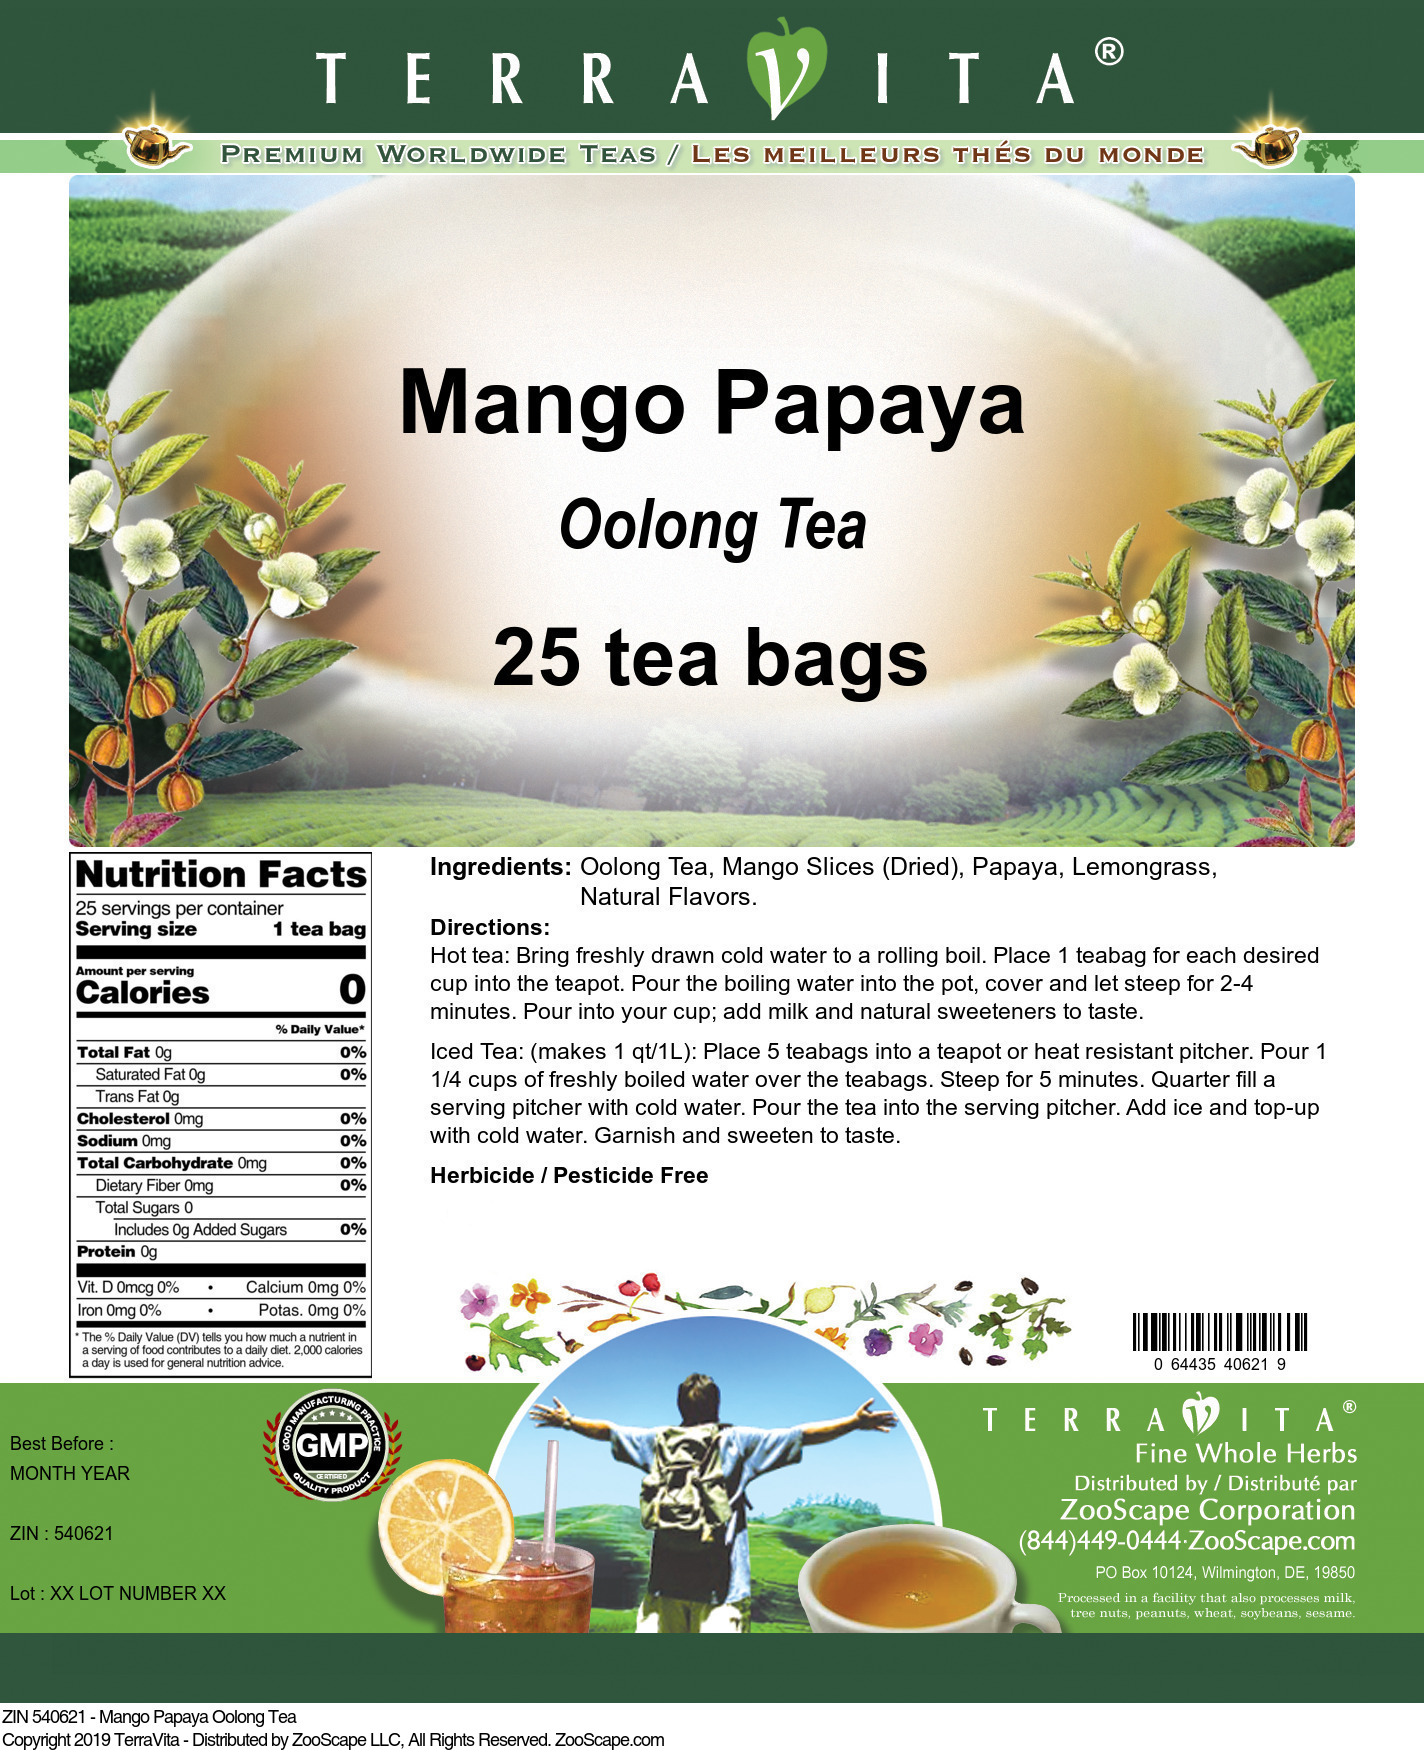 Mango Papaya Oolong Tea - Label